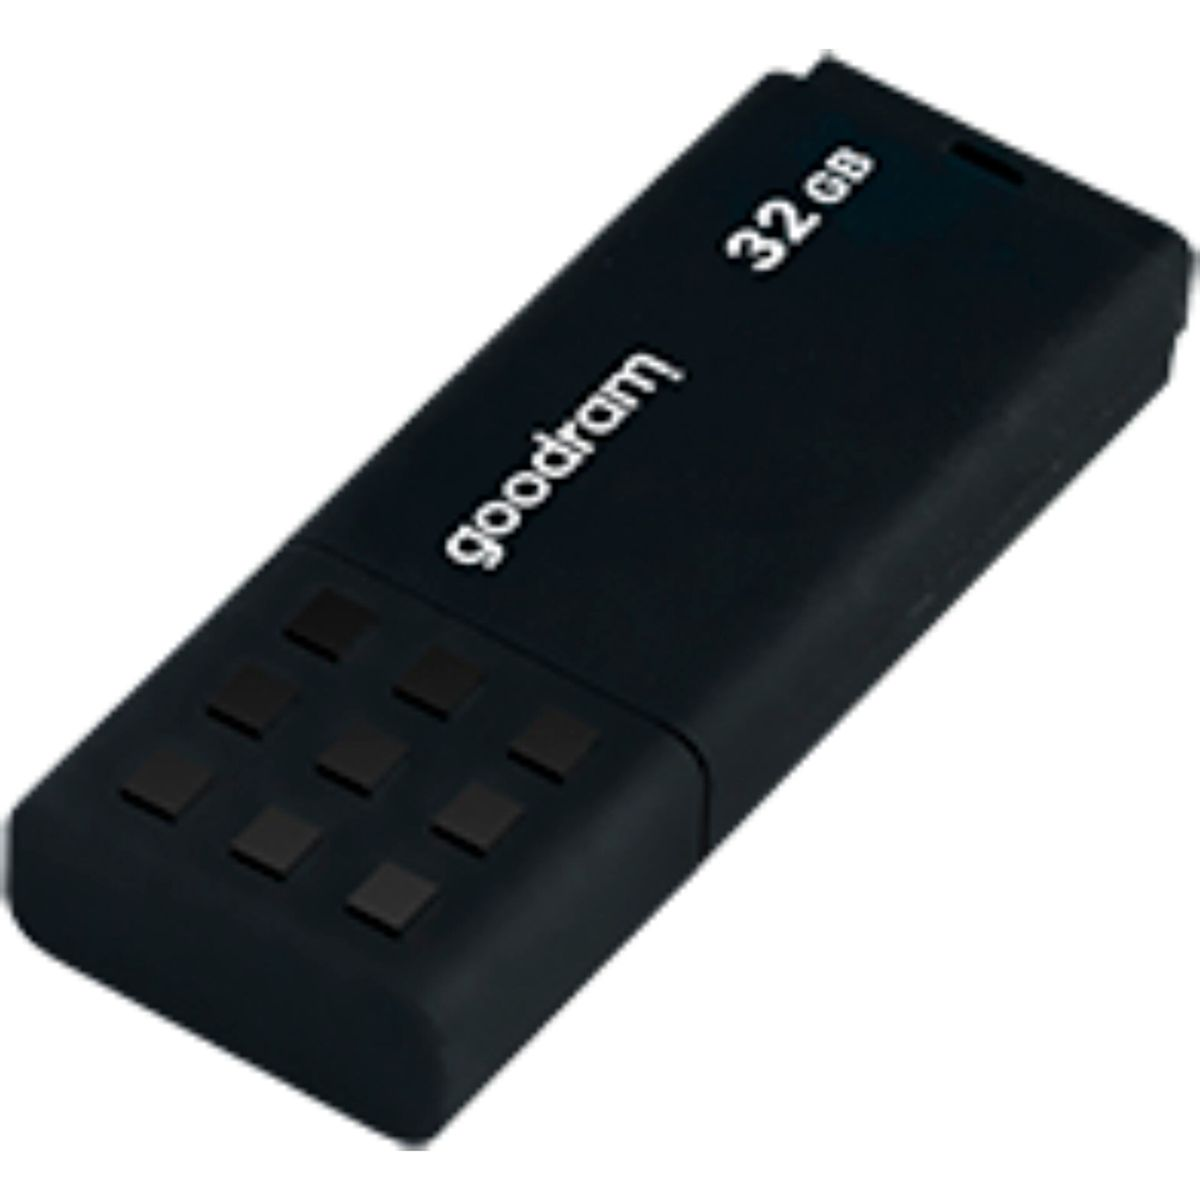 GOODRAM UME3 USB 3.0 32GB Black 32 (schwarz, Stick GB) USB